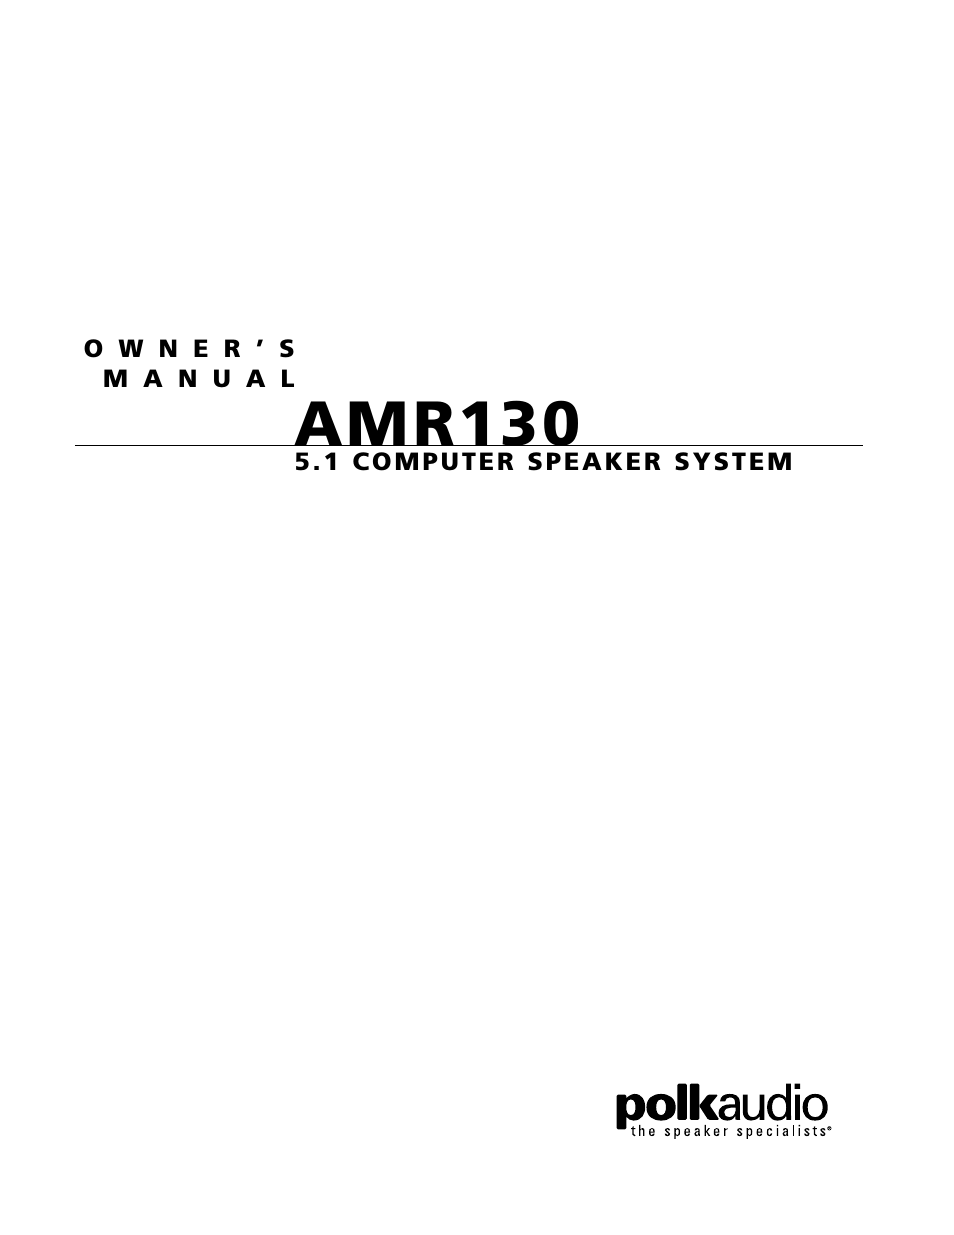 AMR130